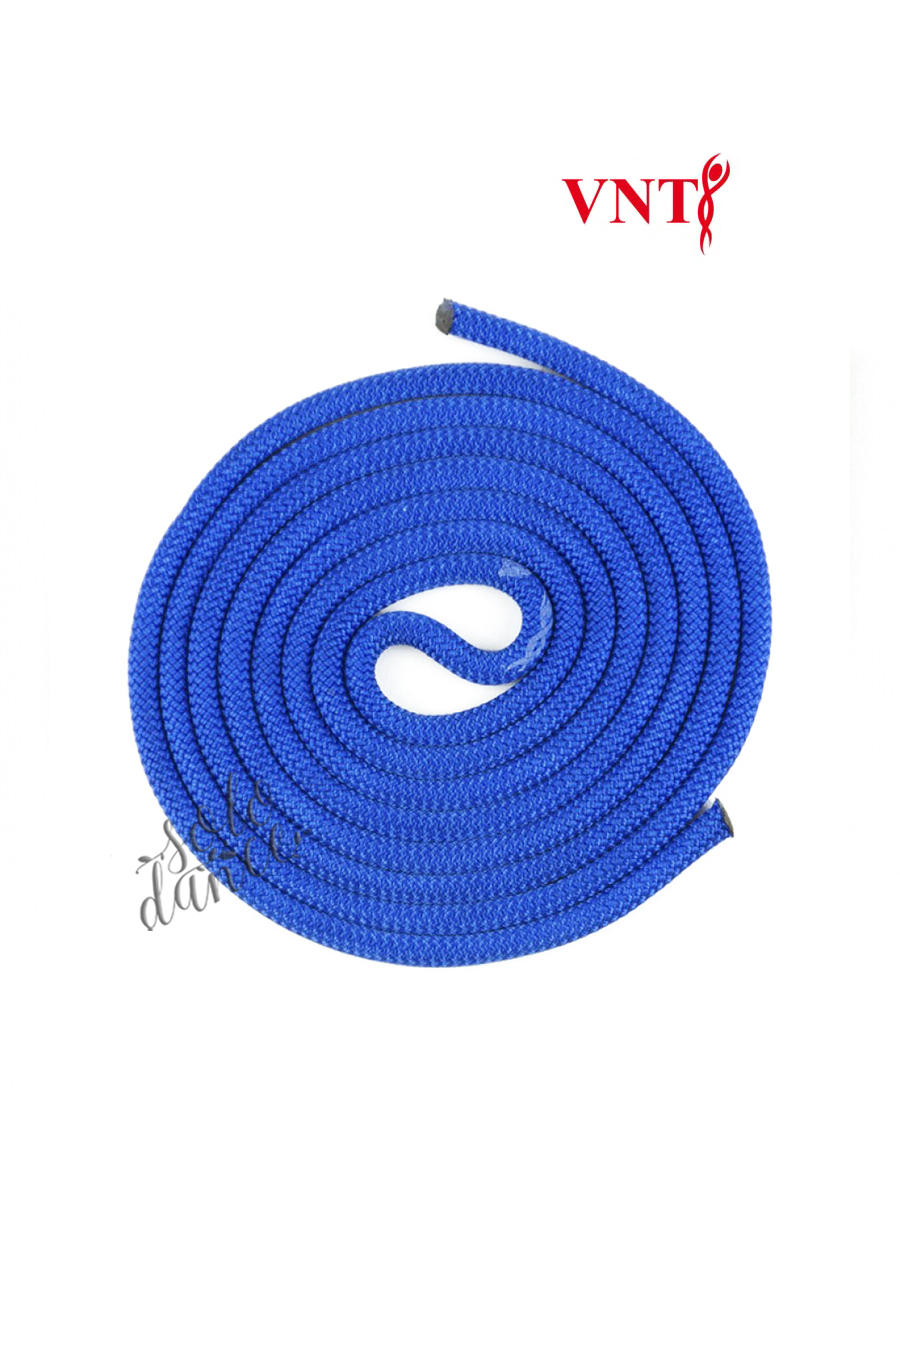 Rope Venturelli for rythmic gymnastic ROP-PL2-211 Aquamarine FIG